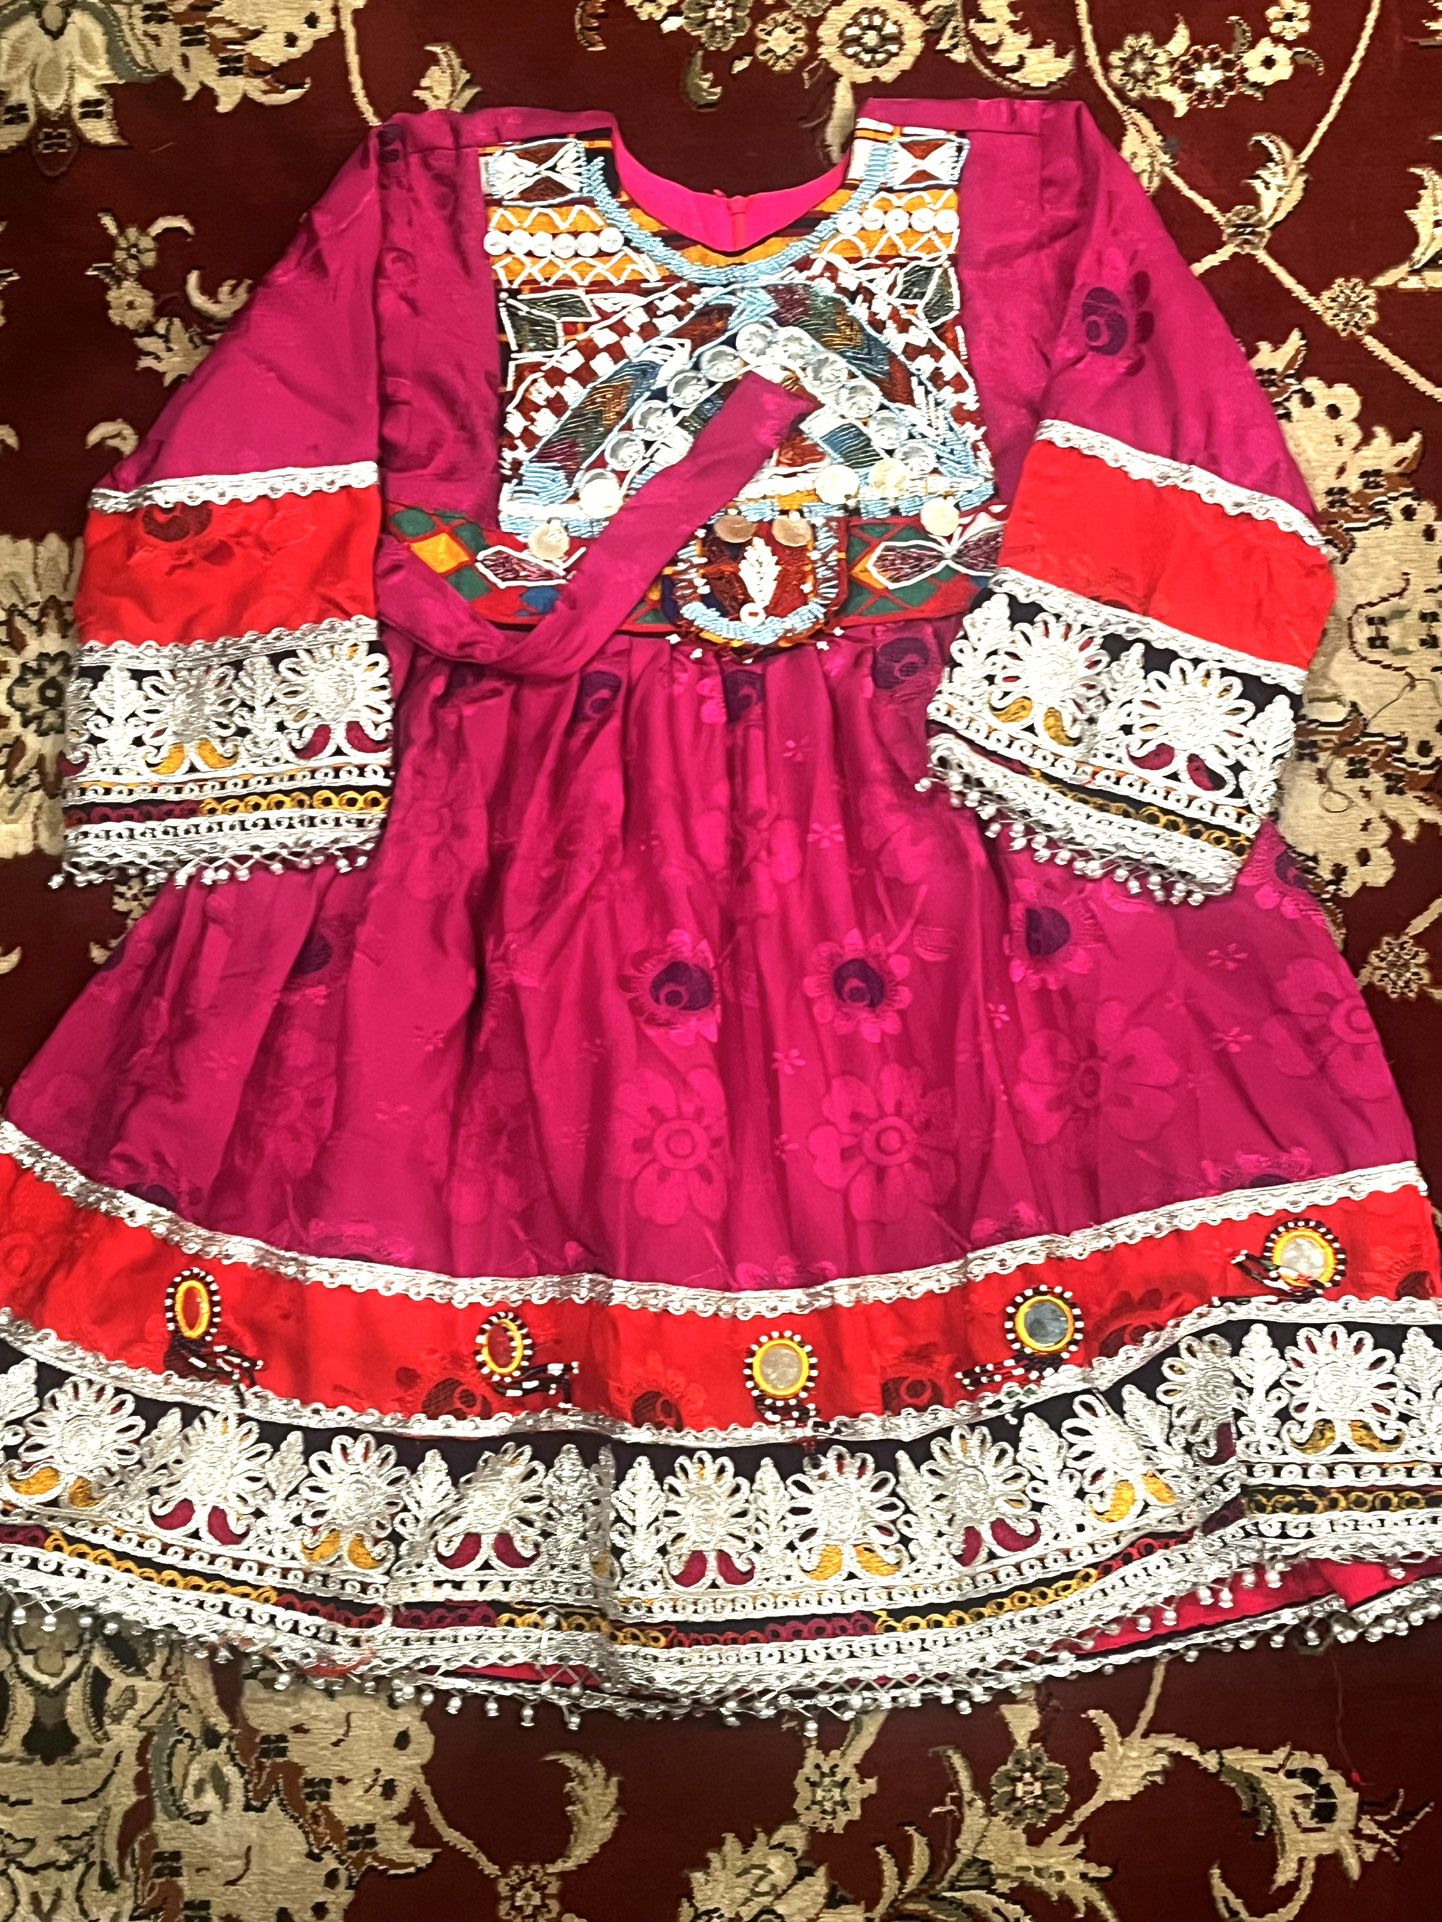 New Girl Afghan Dress 